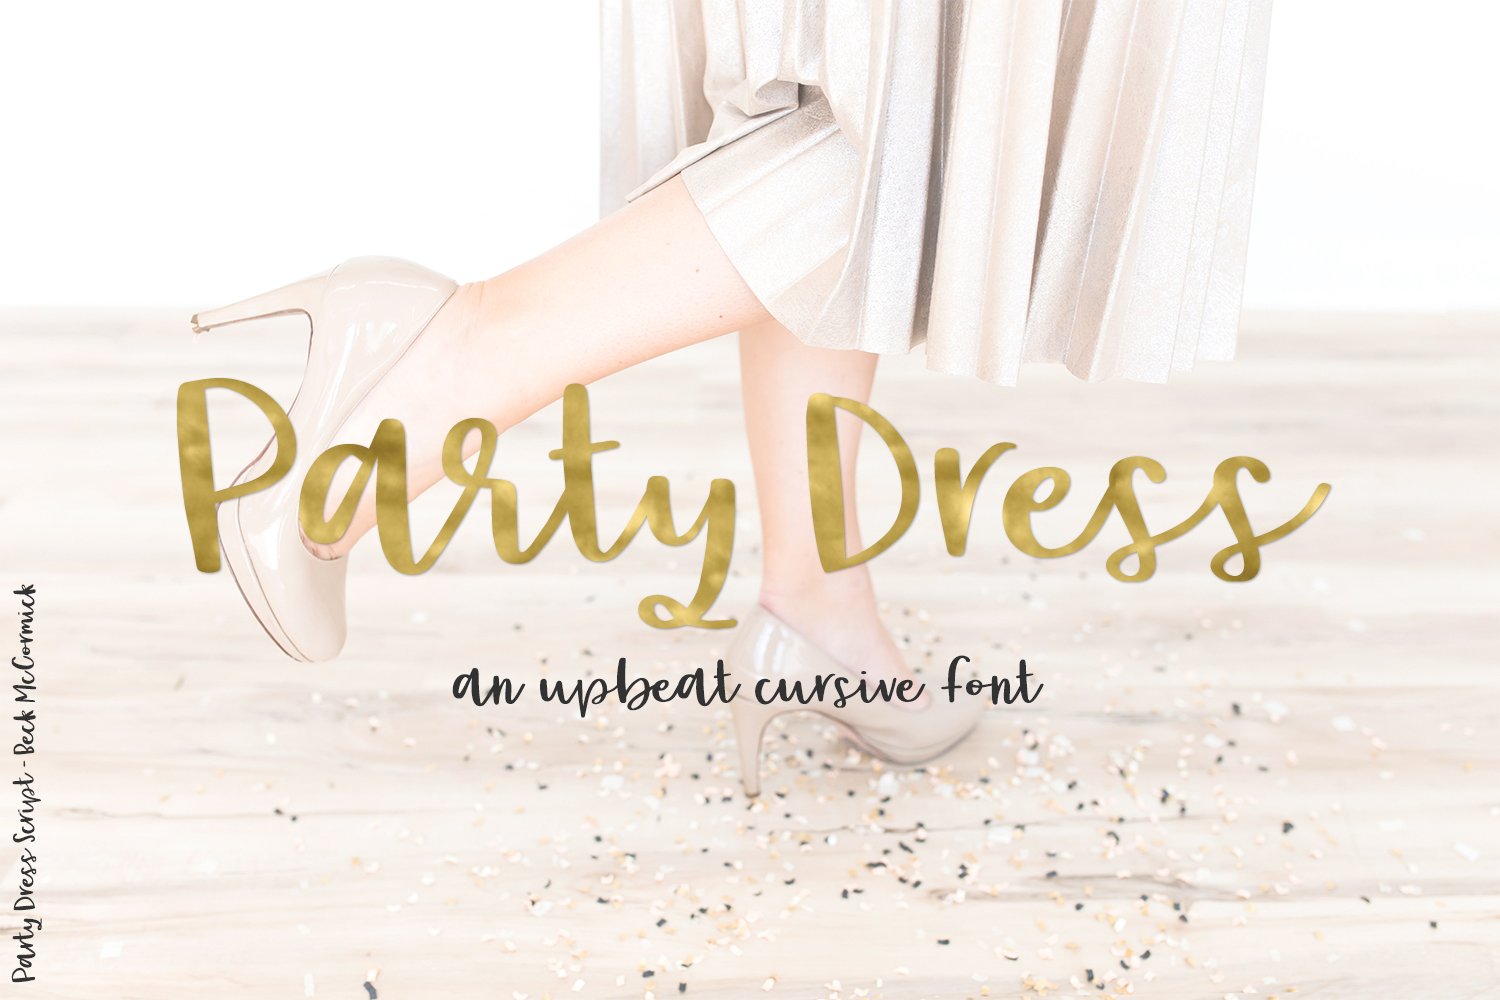 Party Dress Script cover image.